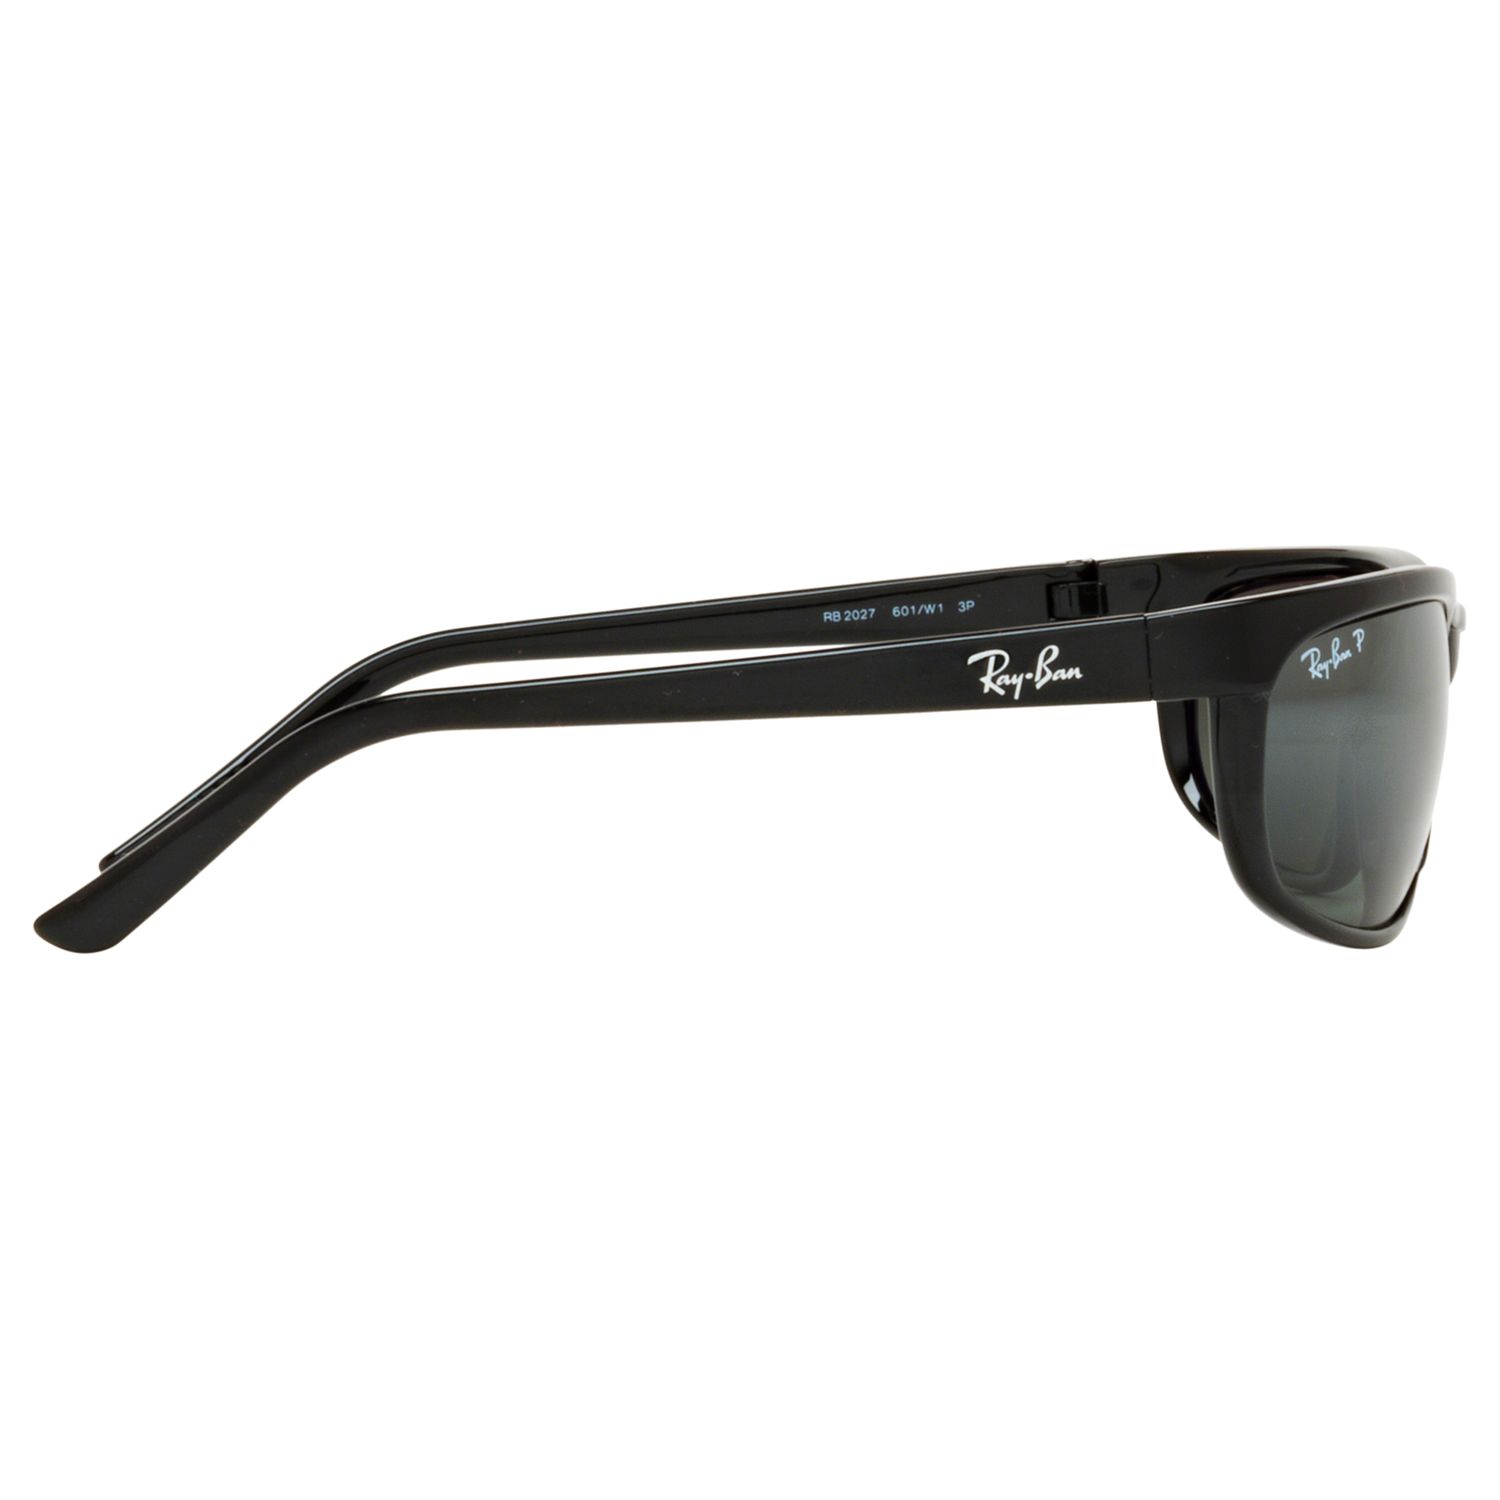 Ray Ban Rb27 Predator 2 Polarised Rectangular Sunglasses Black Grey Mirror At John Lewis Partners